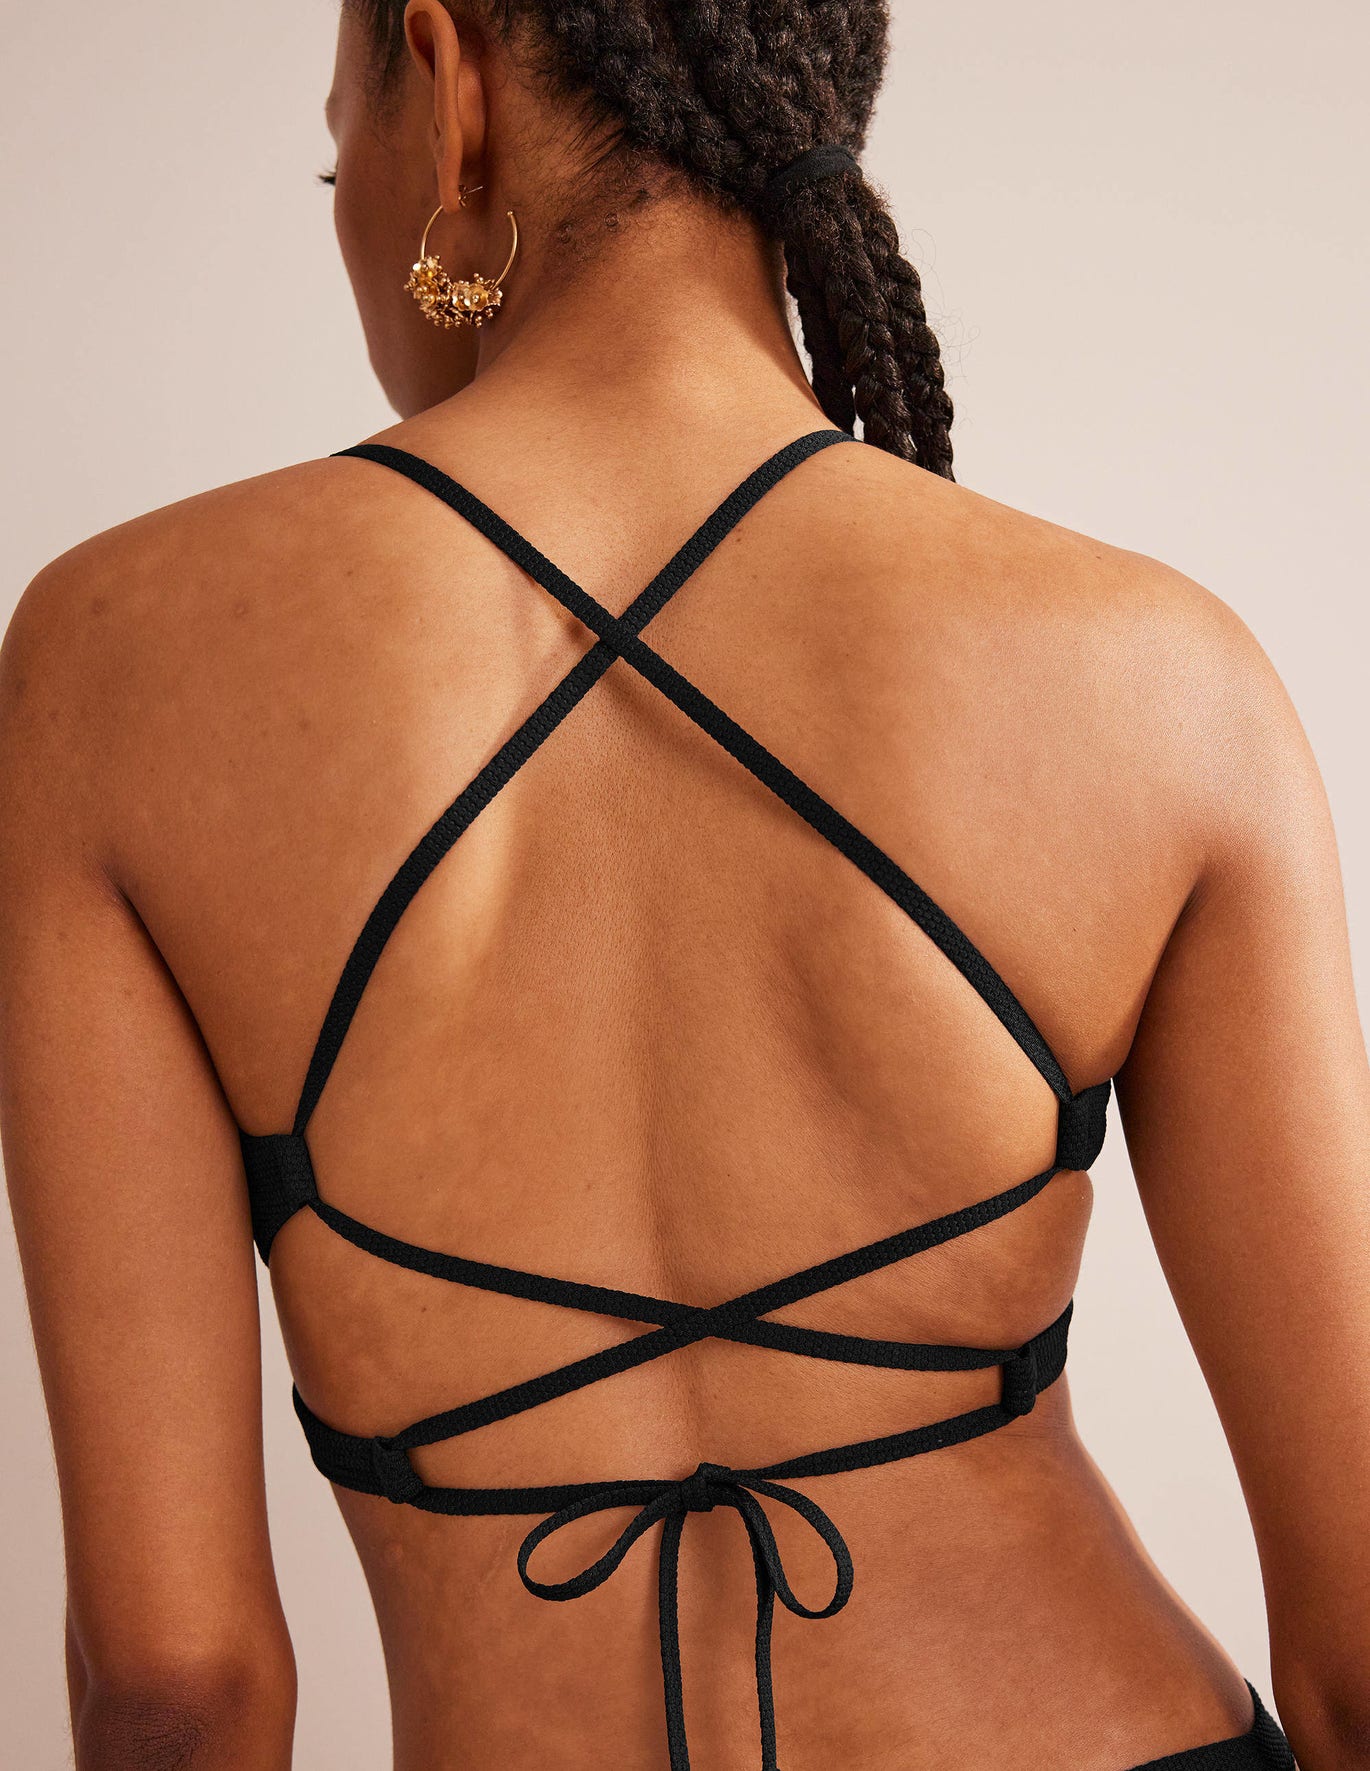 Boden V-neck Cross Back Bikini Top - Black, Honeycomb Texture